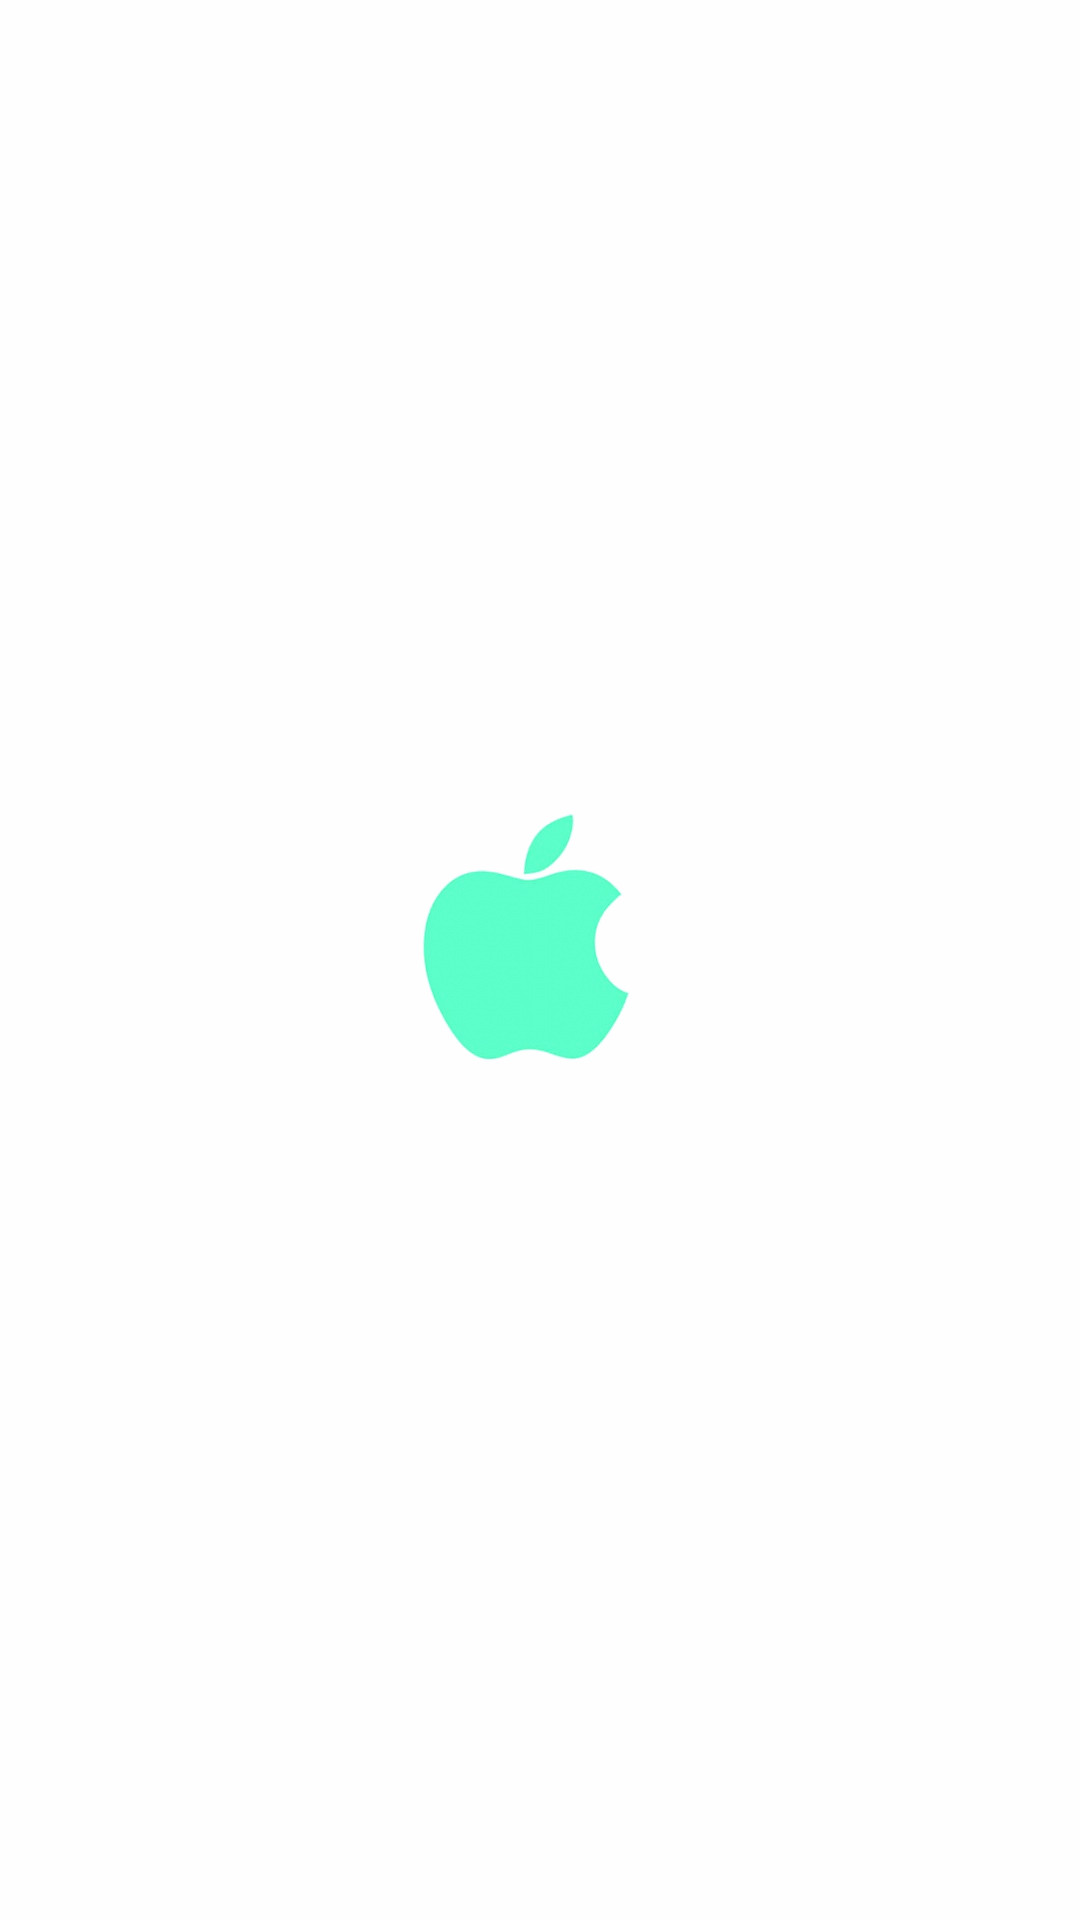 Apple Logo Green Iphone Wallpapers